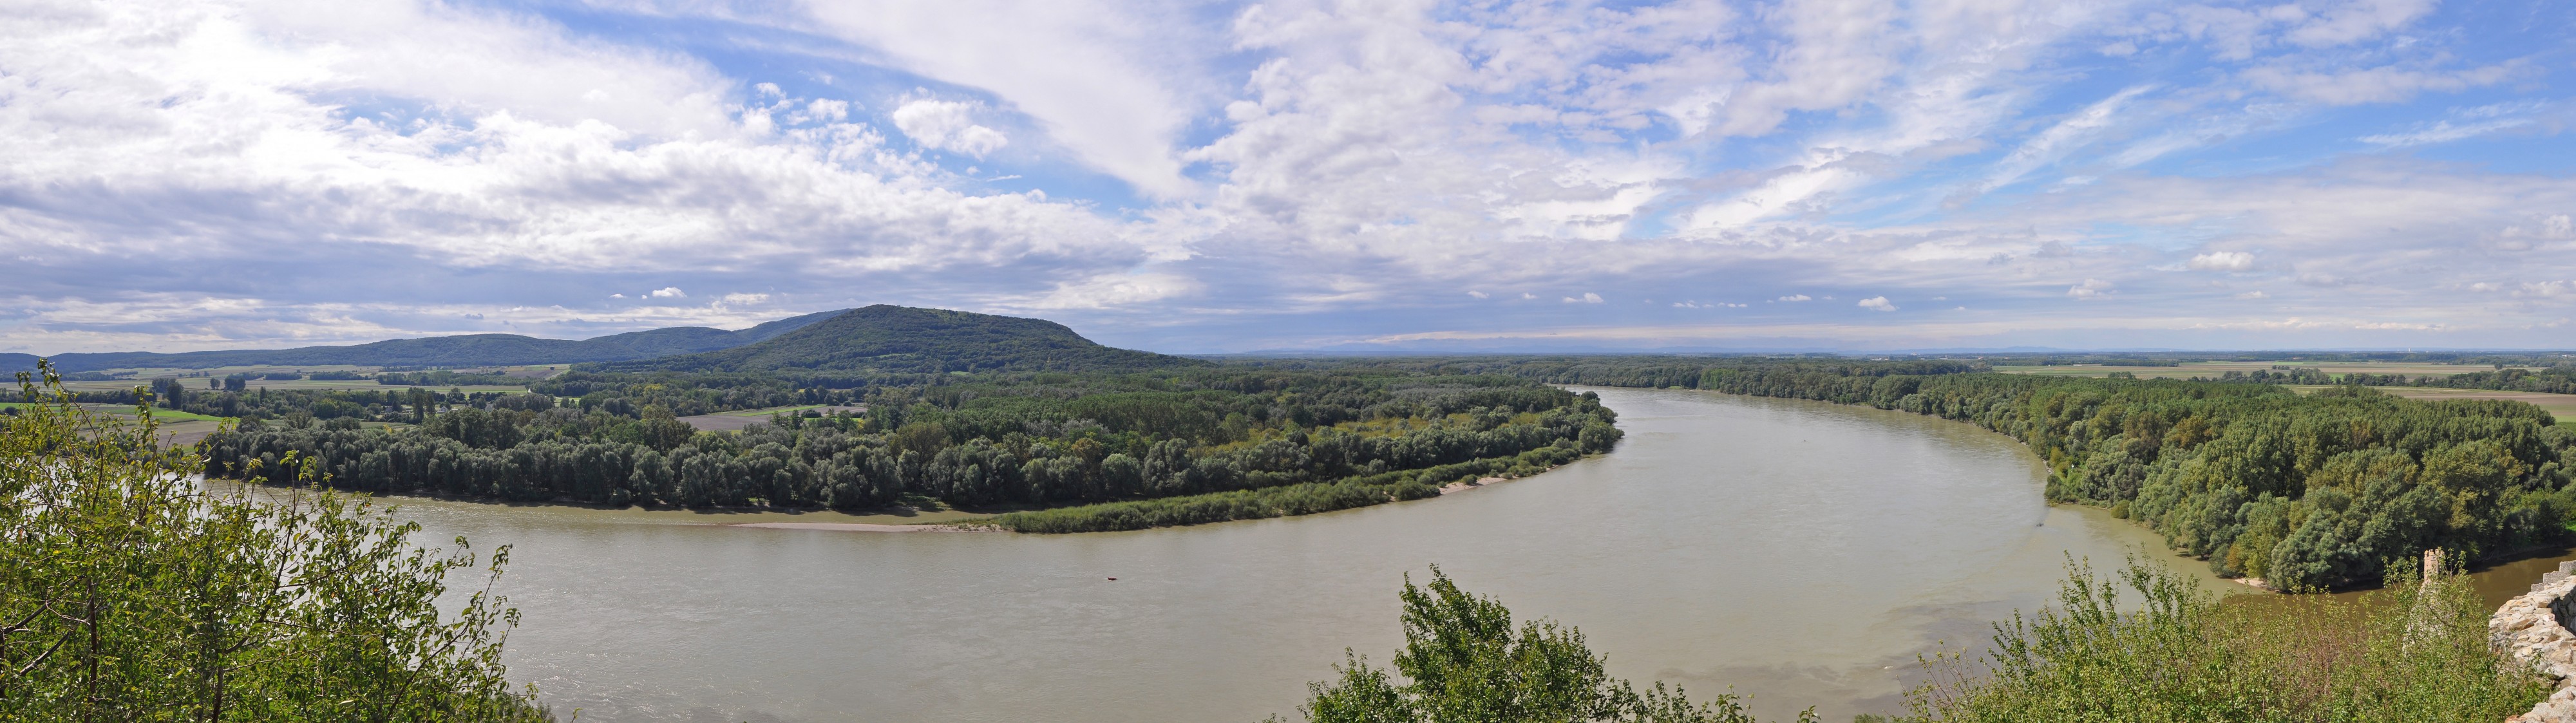 Devin Donau Panorama R01